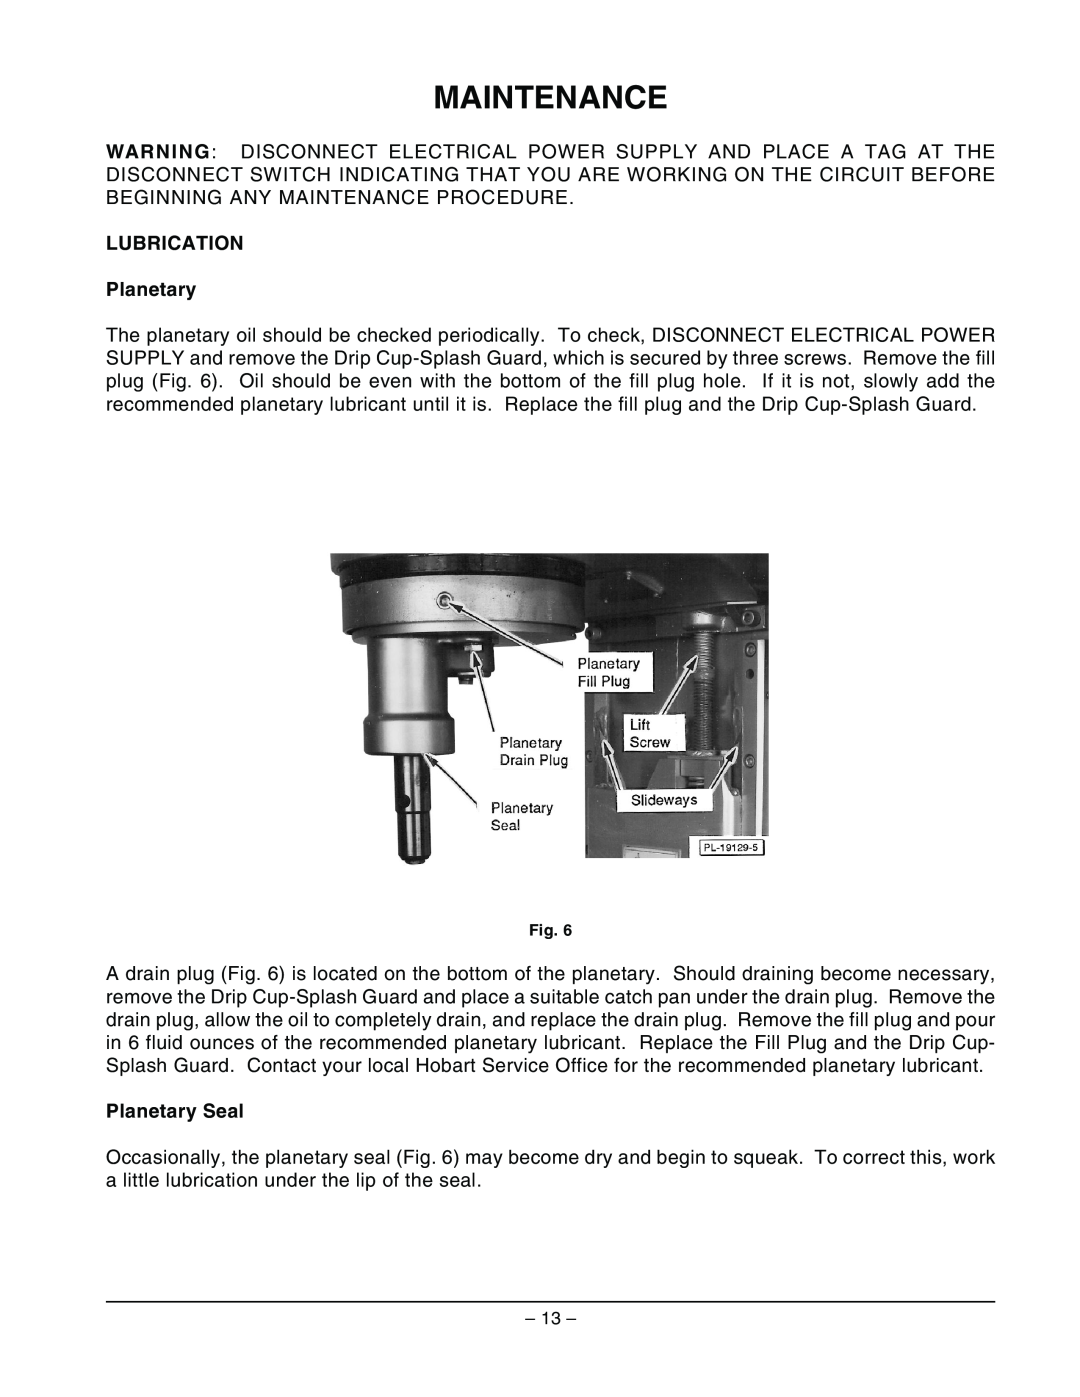 Hobart H600 manual Maintenance, LUBRICATION Planetary, Planetary Seal 